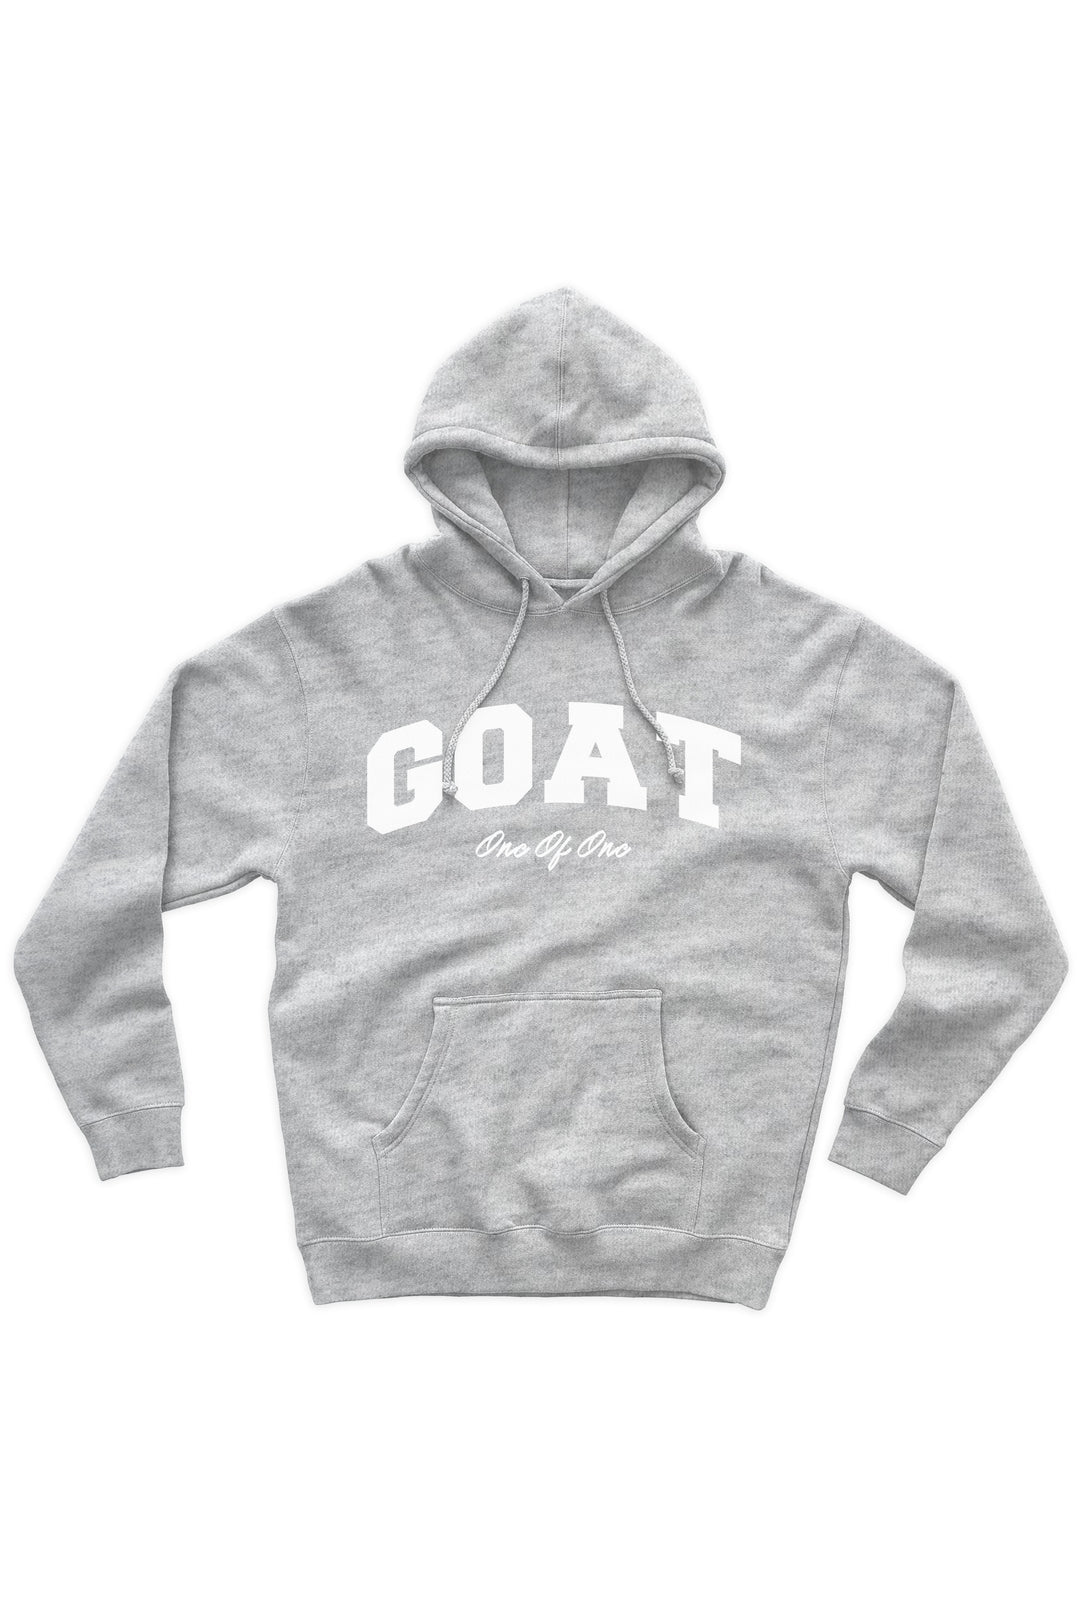 Goat Hoodie (White Logo) - Zamage